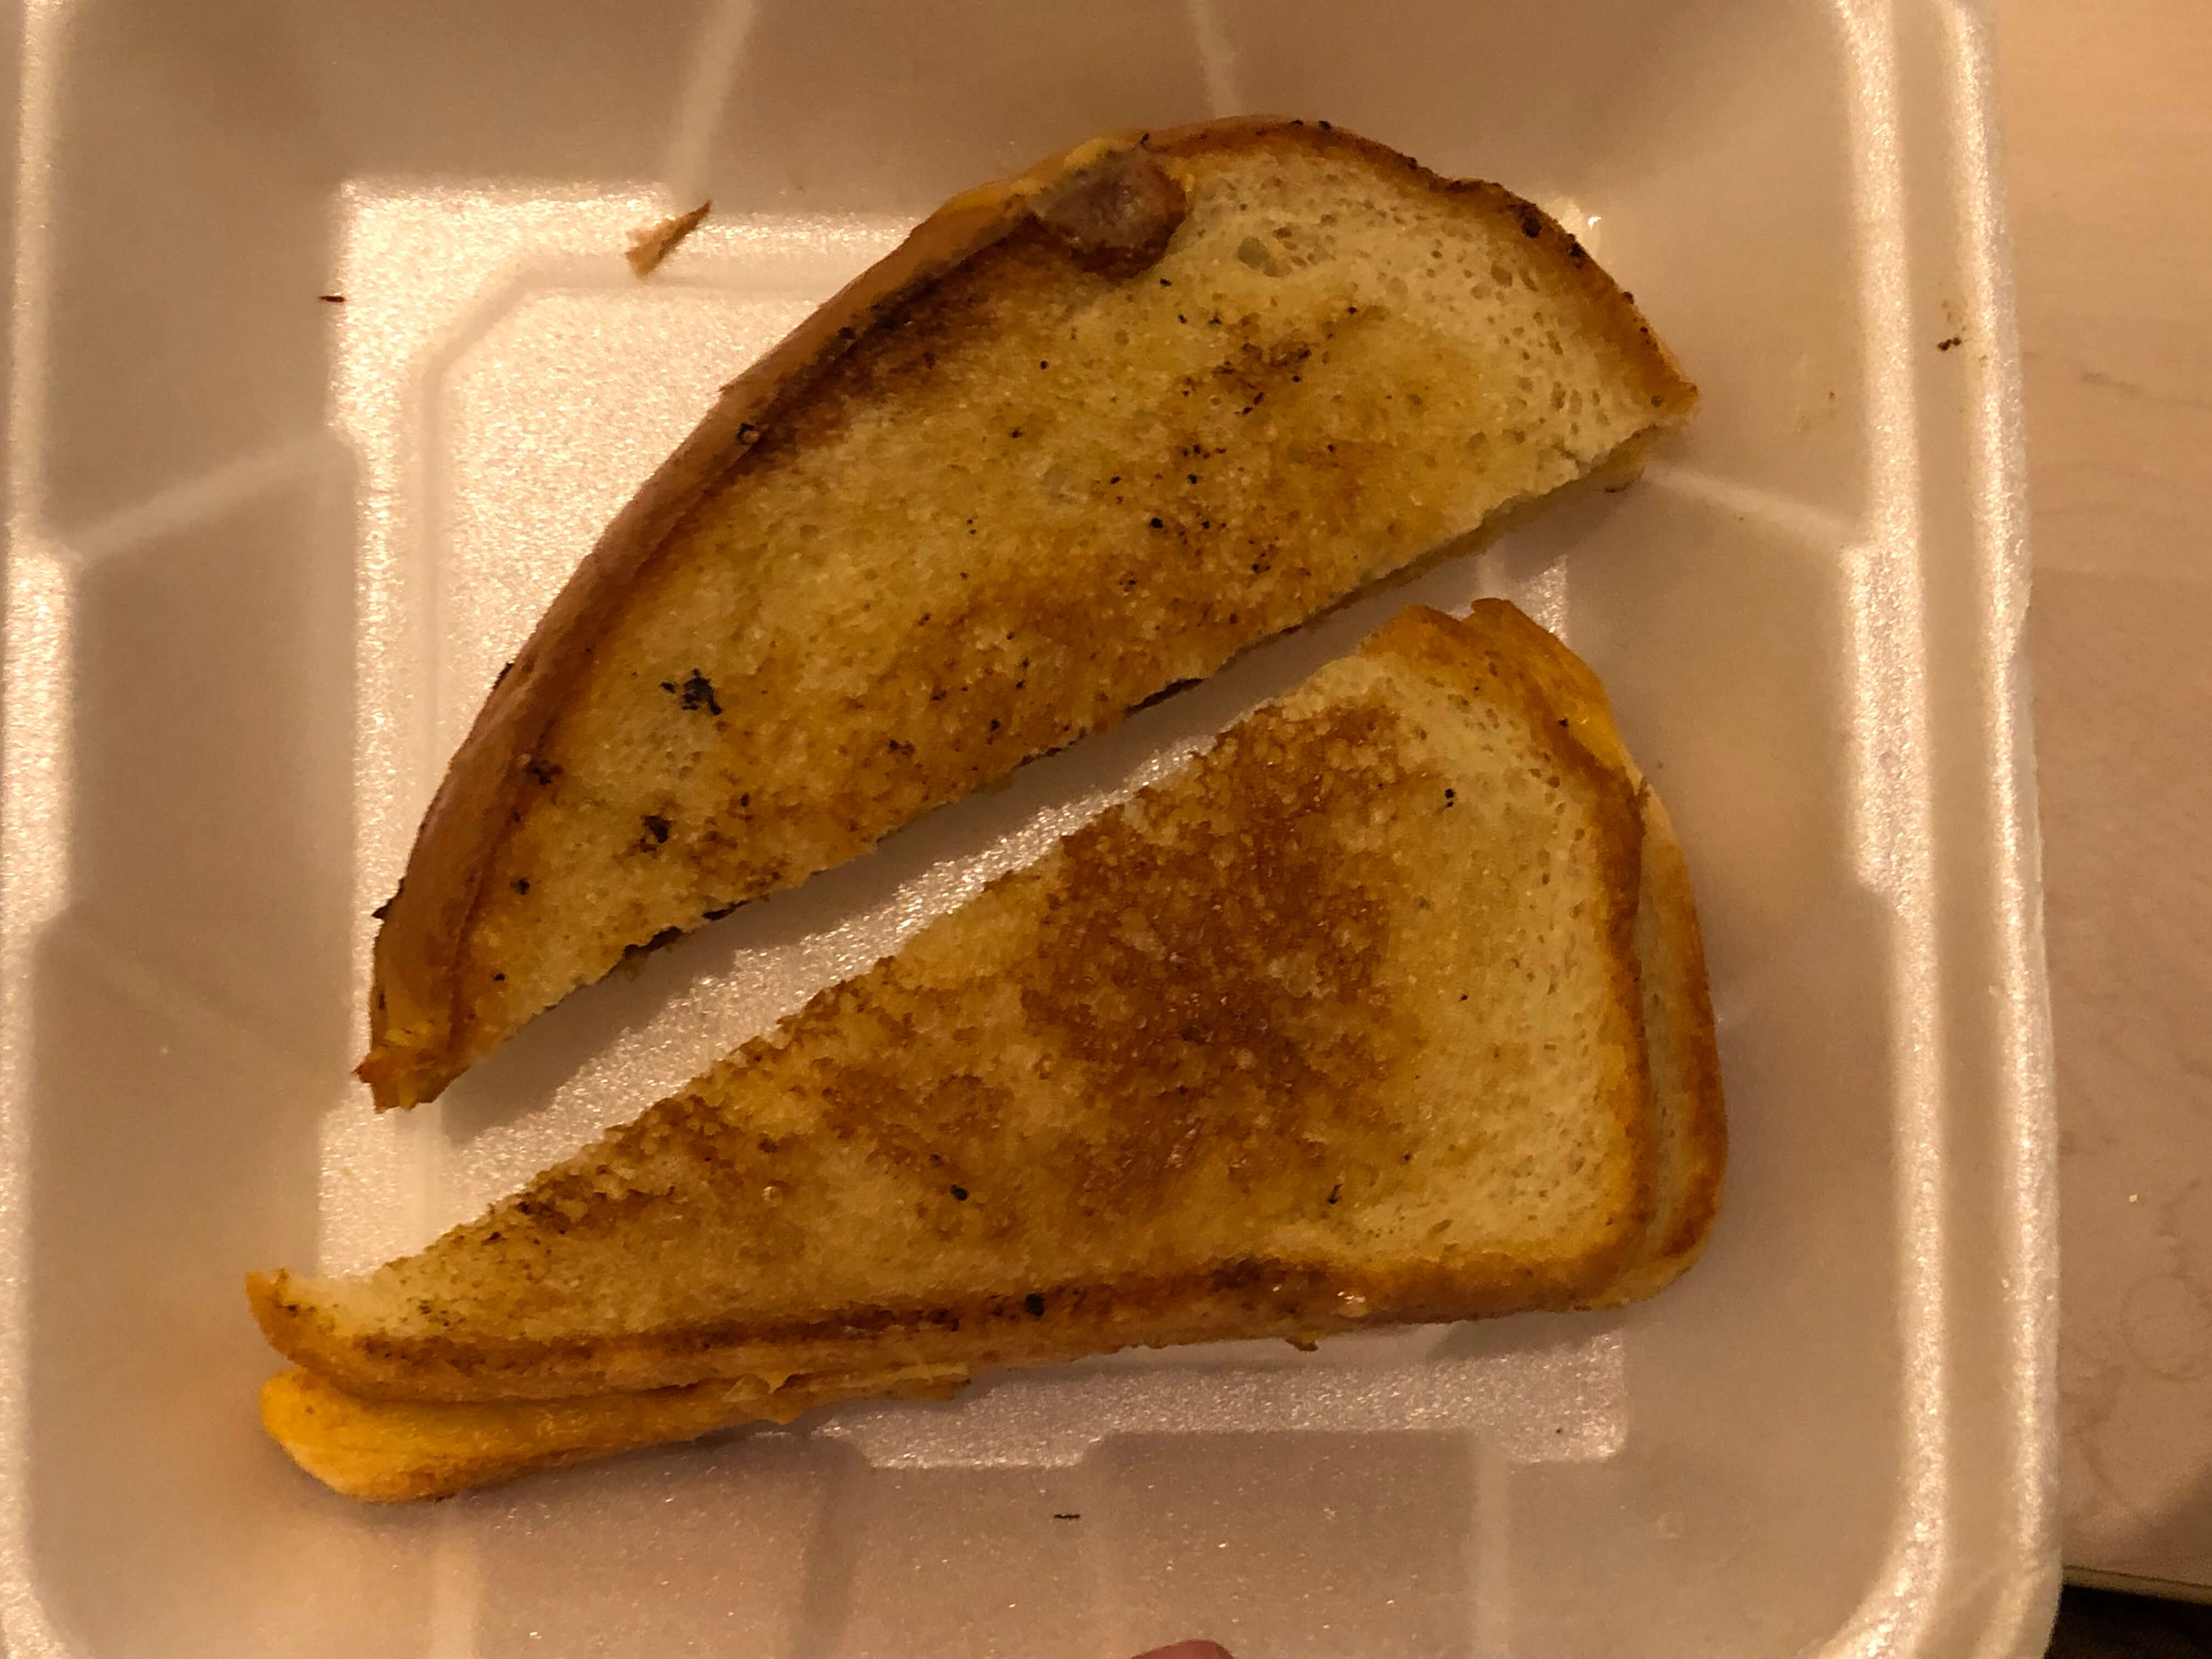 a grilled cheese sandwich, cut diagonally, in a Styrofoam clamshell